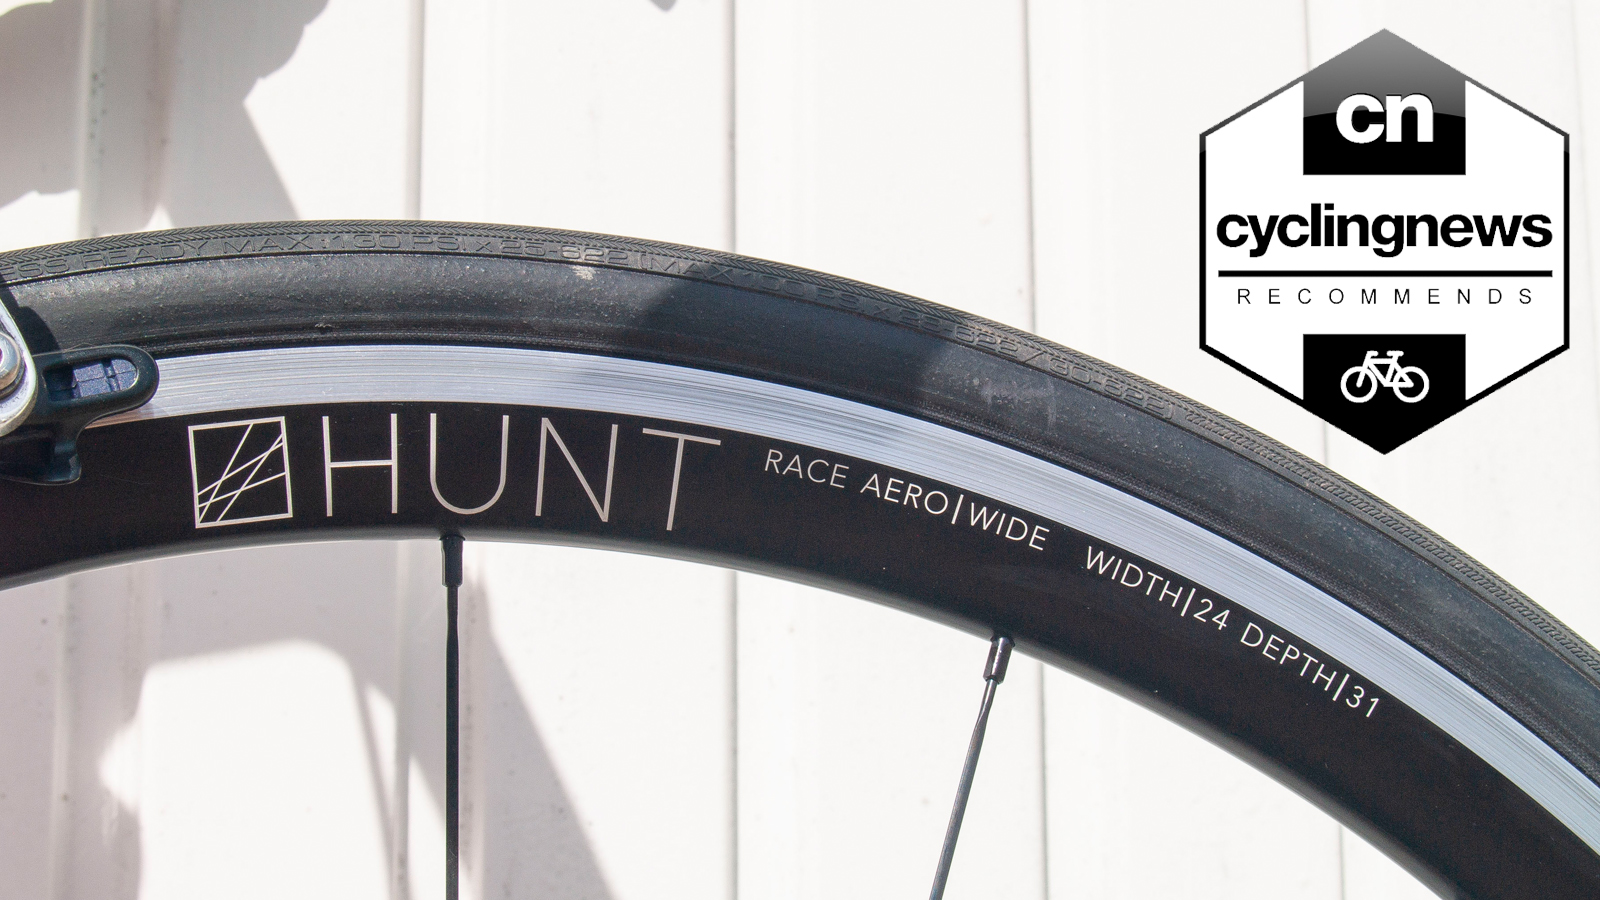 hunt bike wheels review